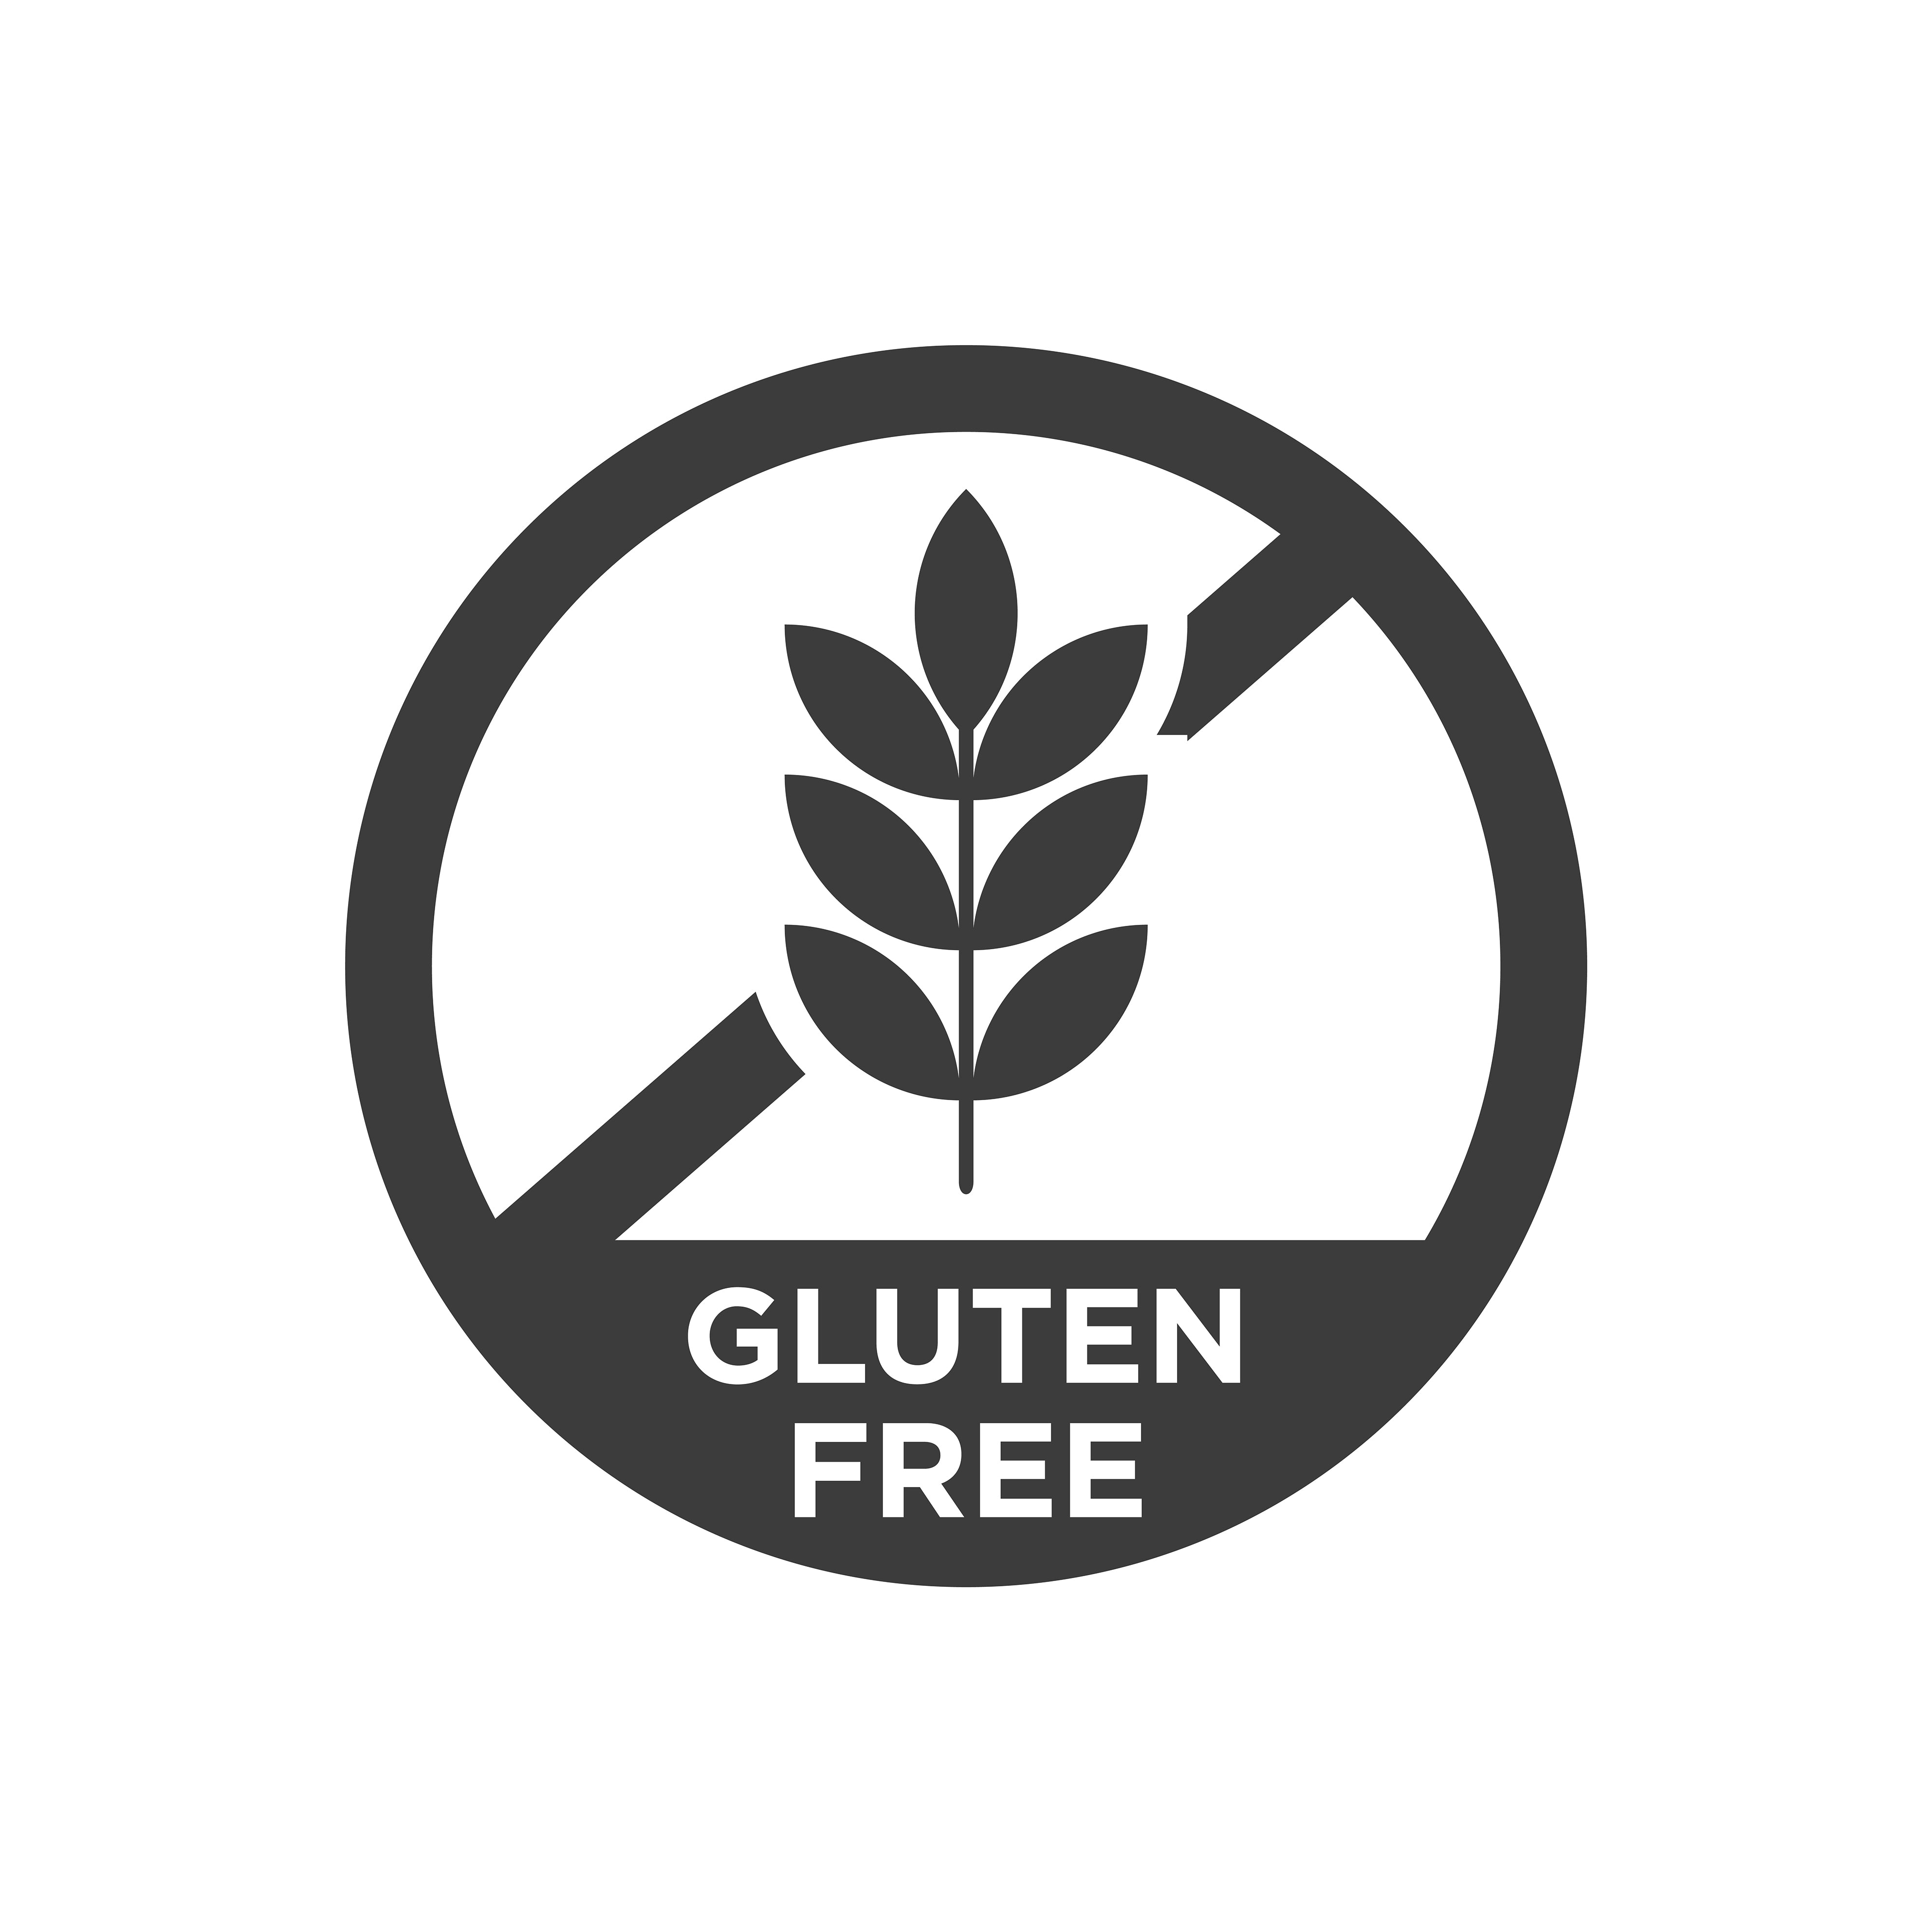 The Benefits of a Gluten-Free Diet